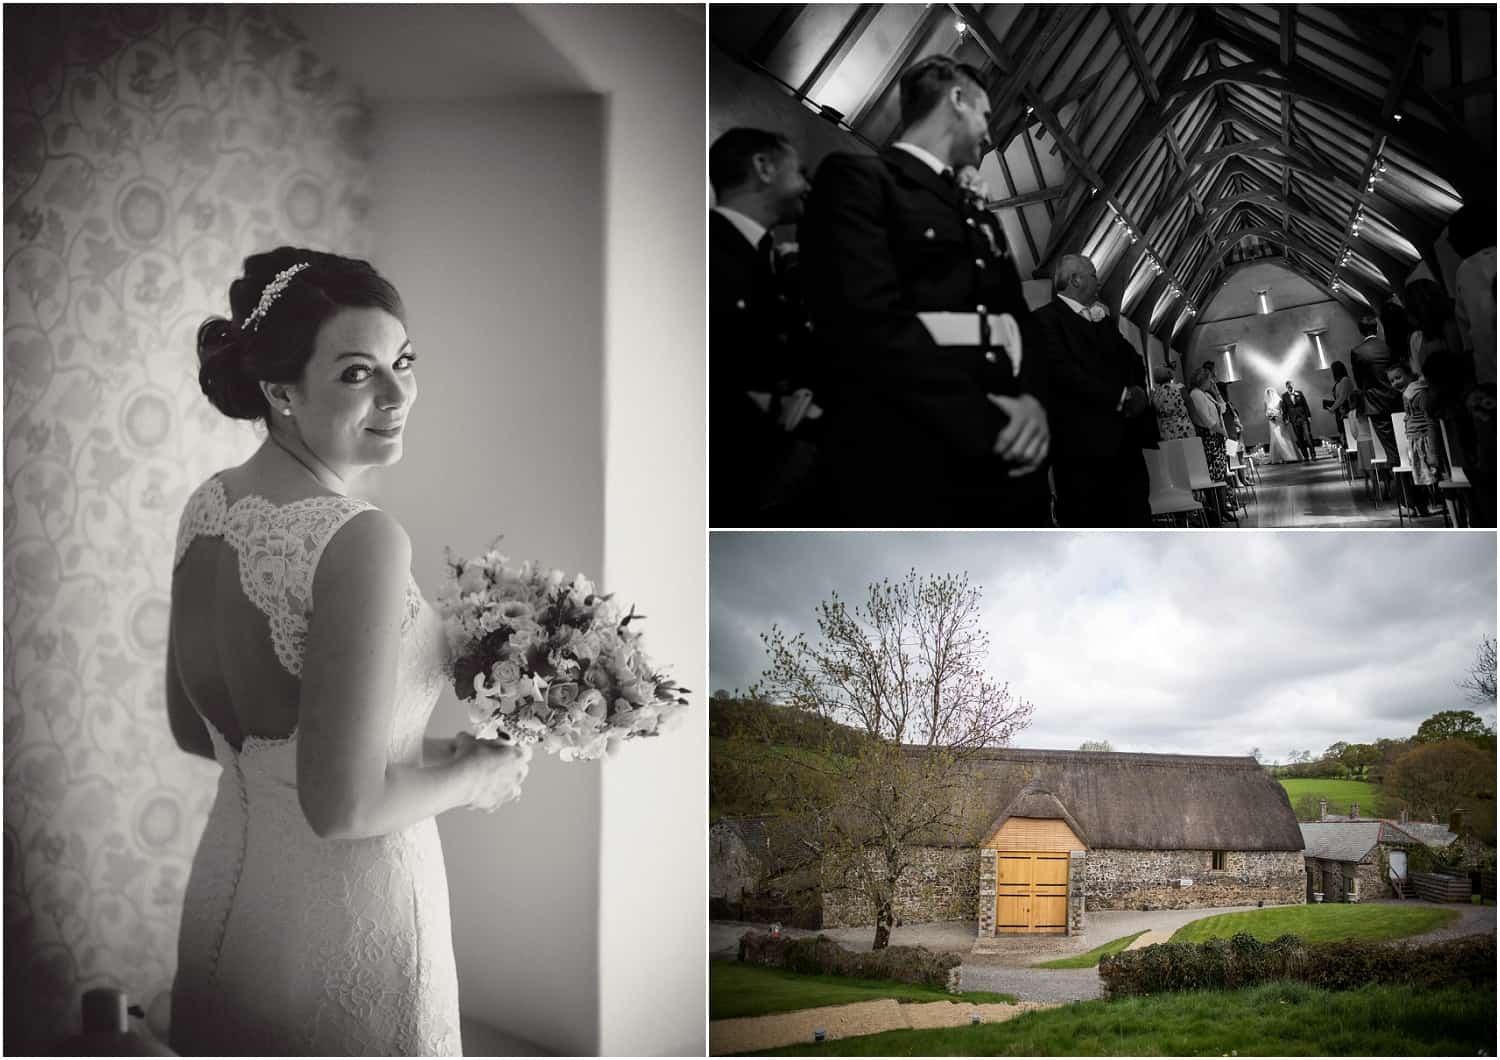 The Great Barn Weddings - Faye and Dan - barn weddings, Devon weddings, Rebecca Roundhill photography